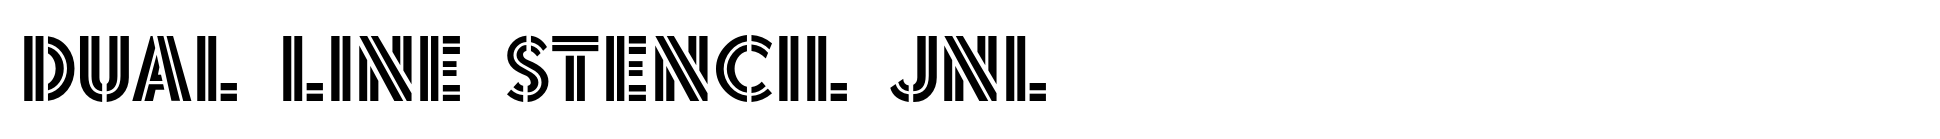 Dual Line Stencil JNL